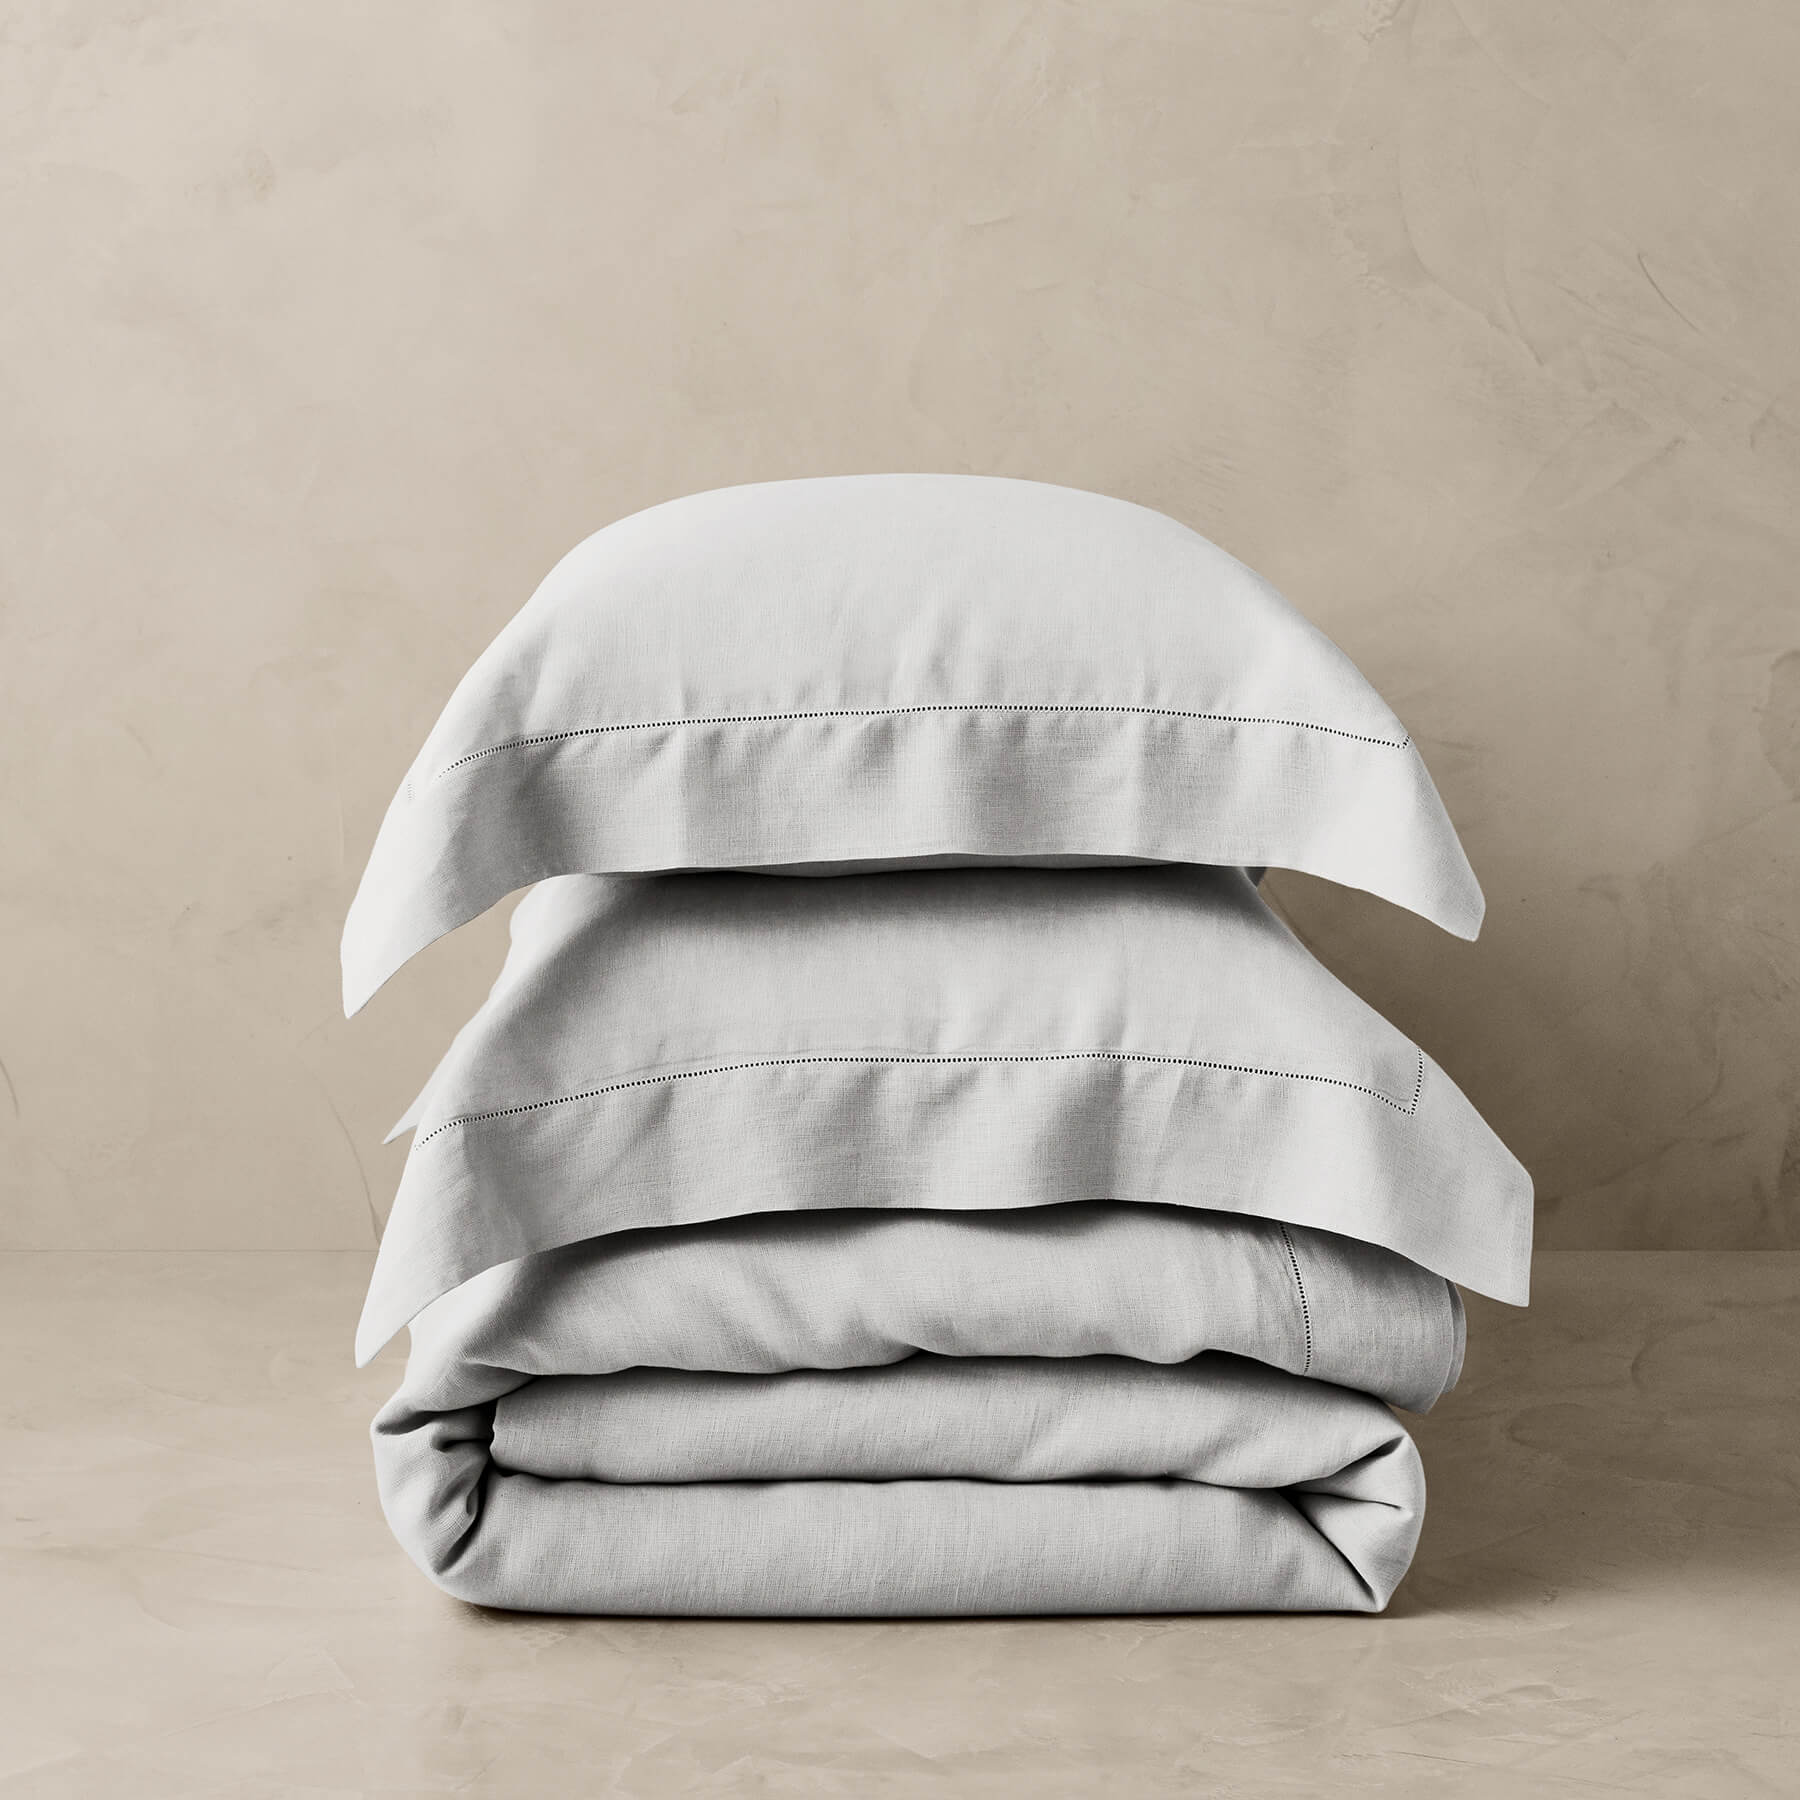 Kings & Queens Vintage Linen Duvet Cover Set in White Bedding Set